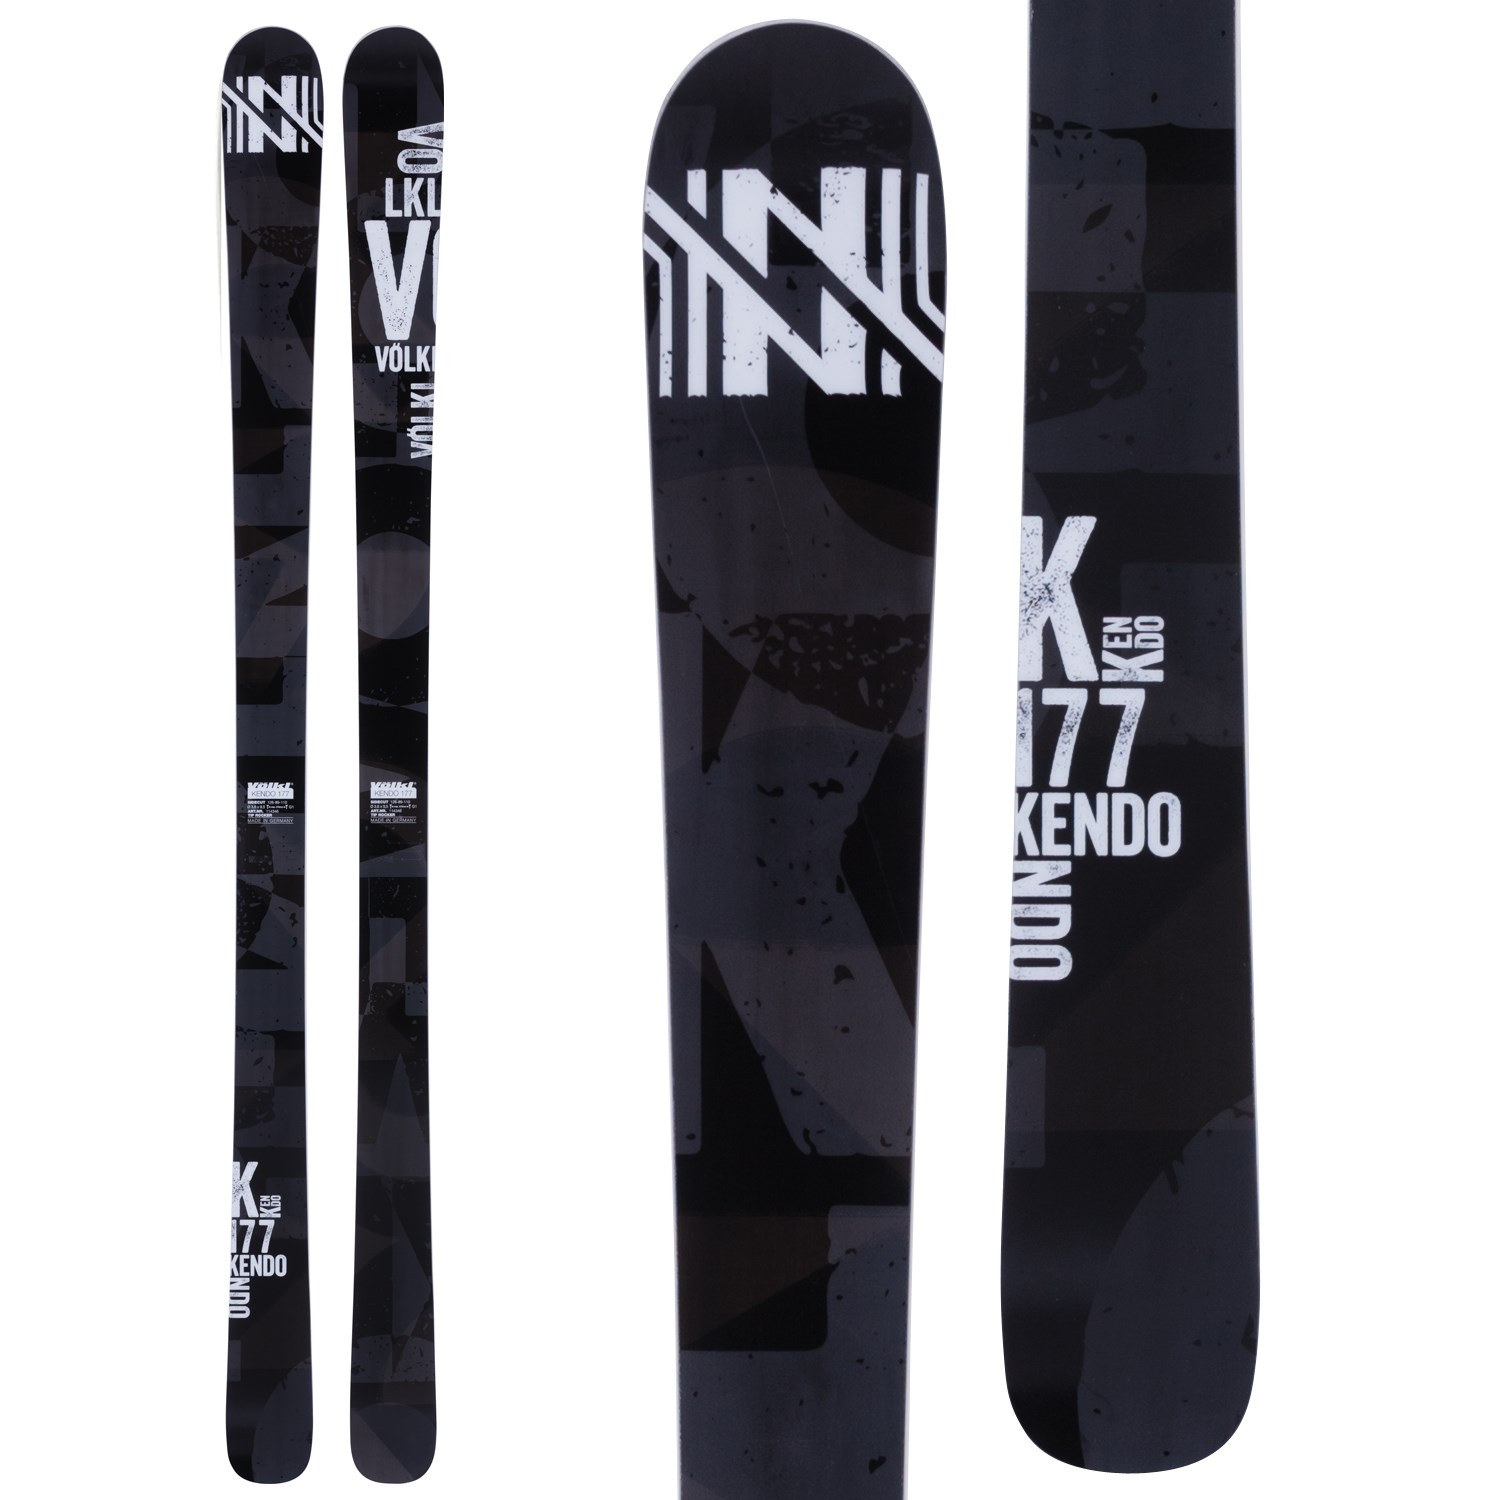 Volkl Kendo Skis 2015 | evo